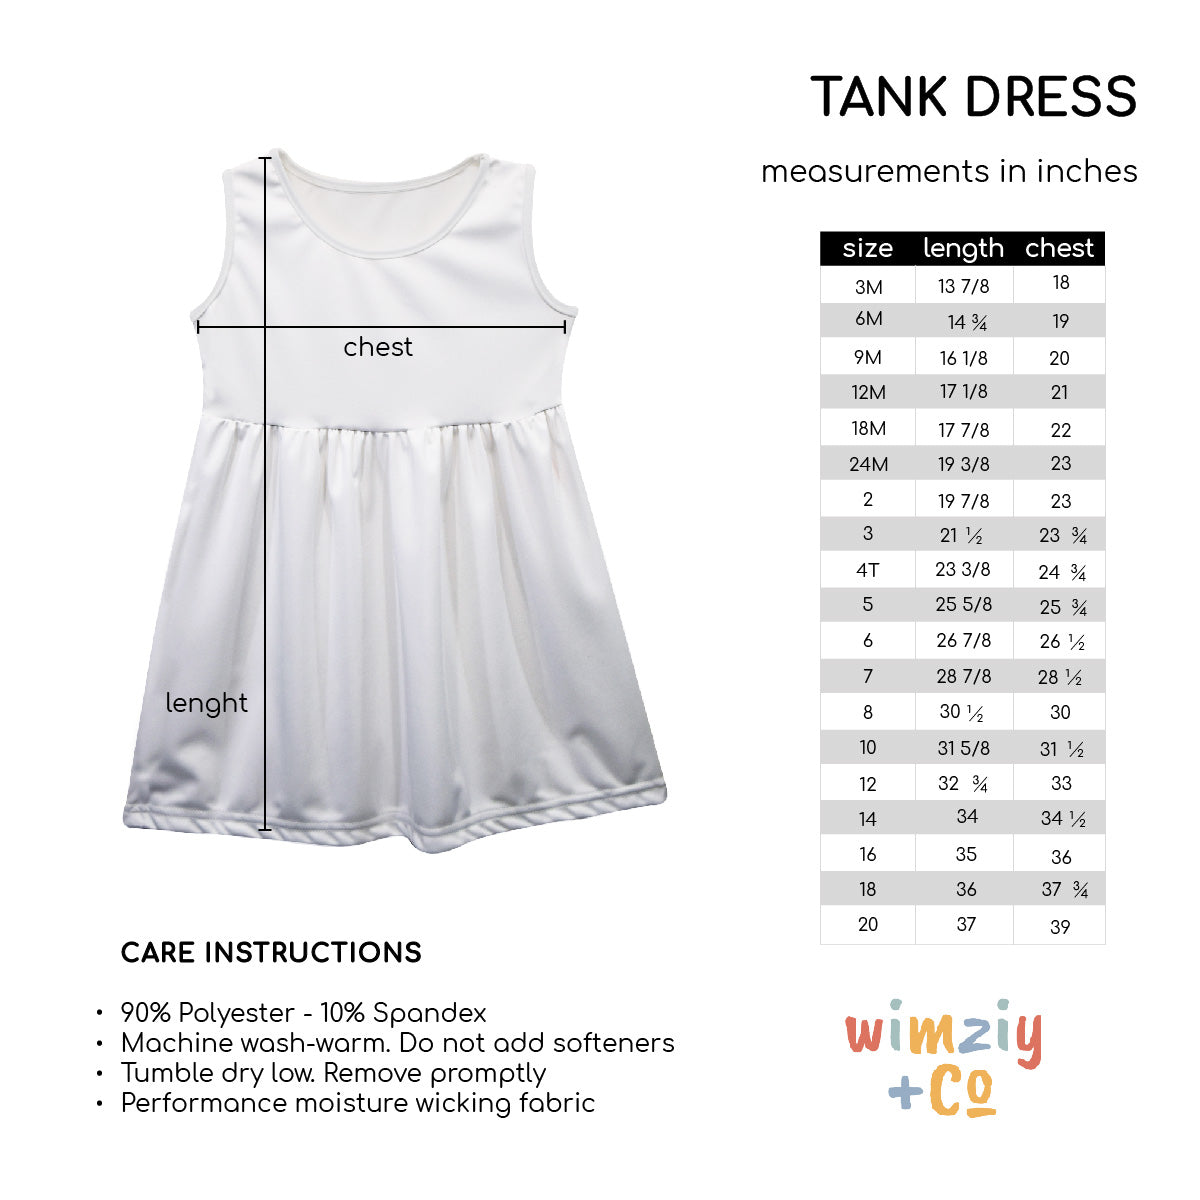 Maroon and White Sleeveless Tank Dress Stripes on Skirt - Wimziy&Co.